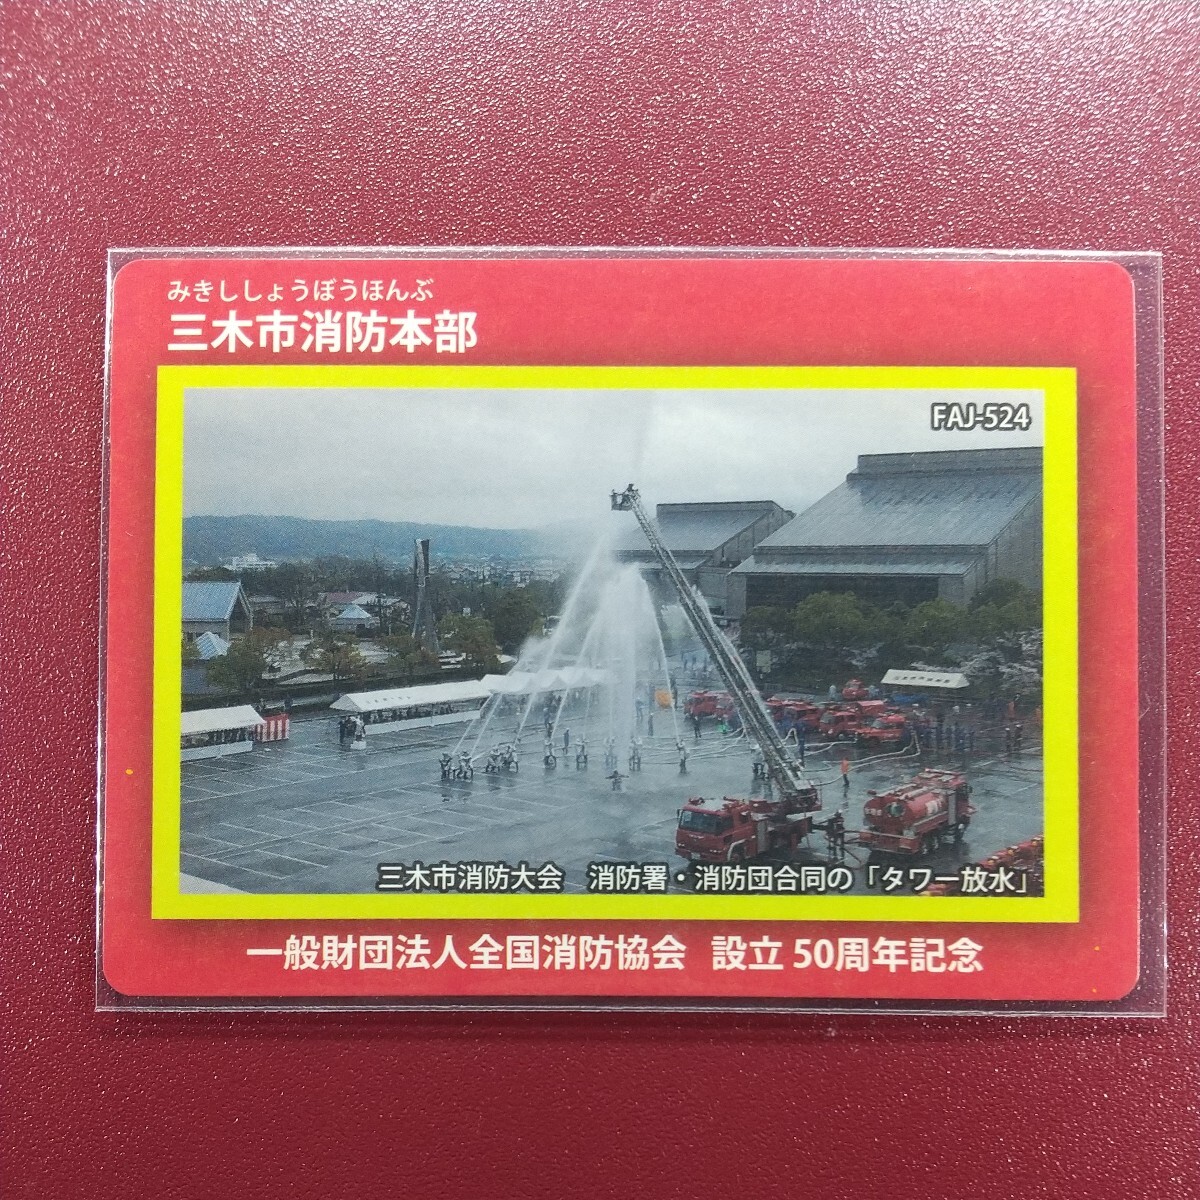 FJA-524 三木市消防本部 消防カード  一般財団法人全国消防協会 設立５０周年記念の画像1